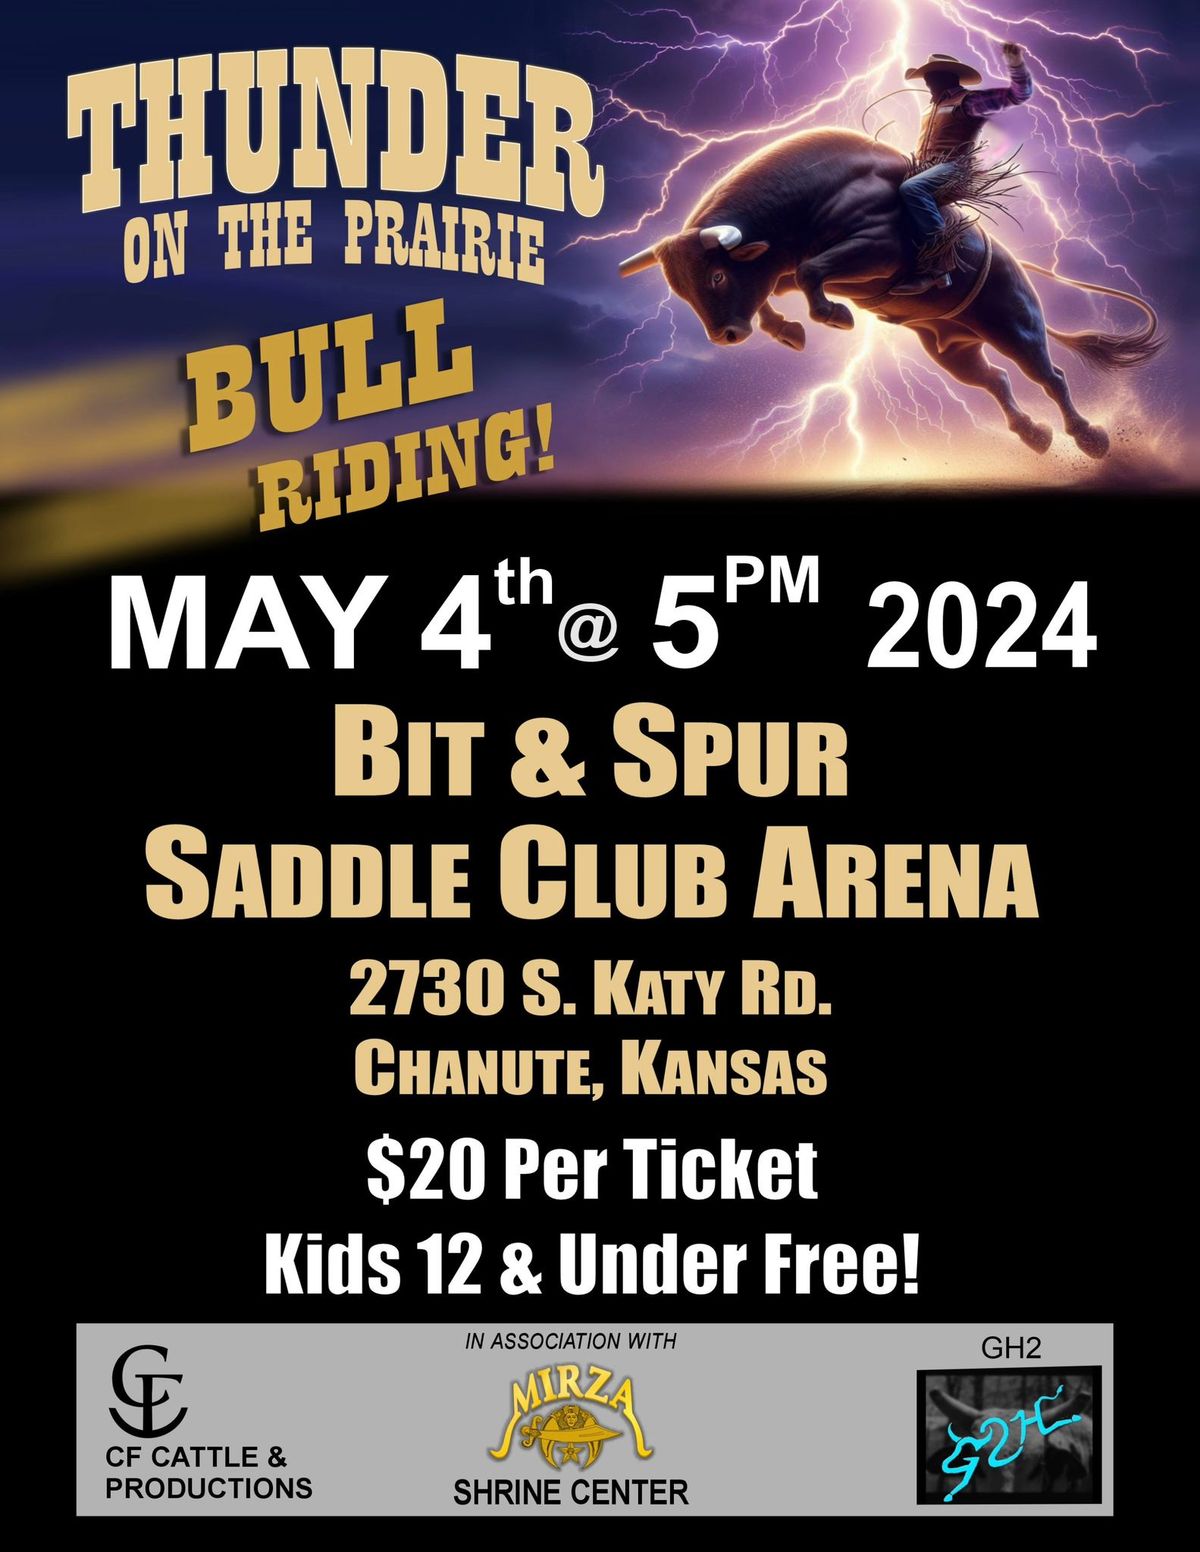 Thunder on the Prairie (Bull Riding Event)